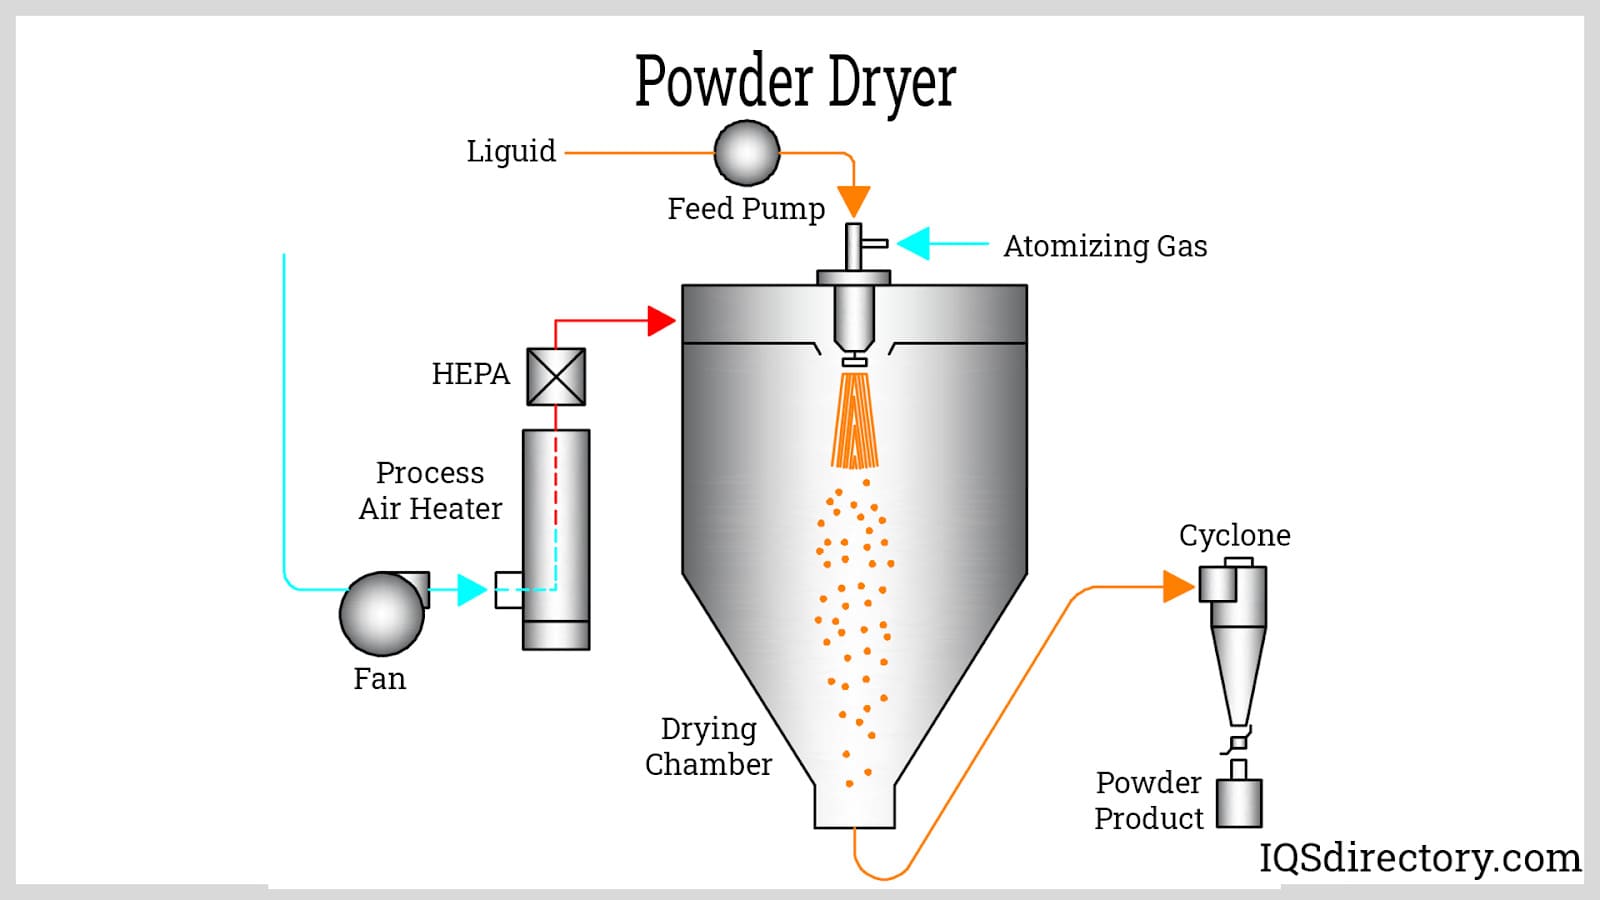 Powder Dryer